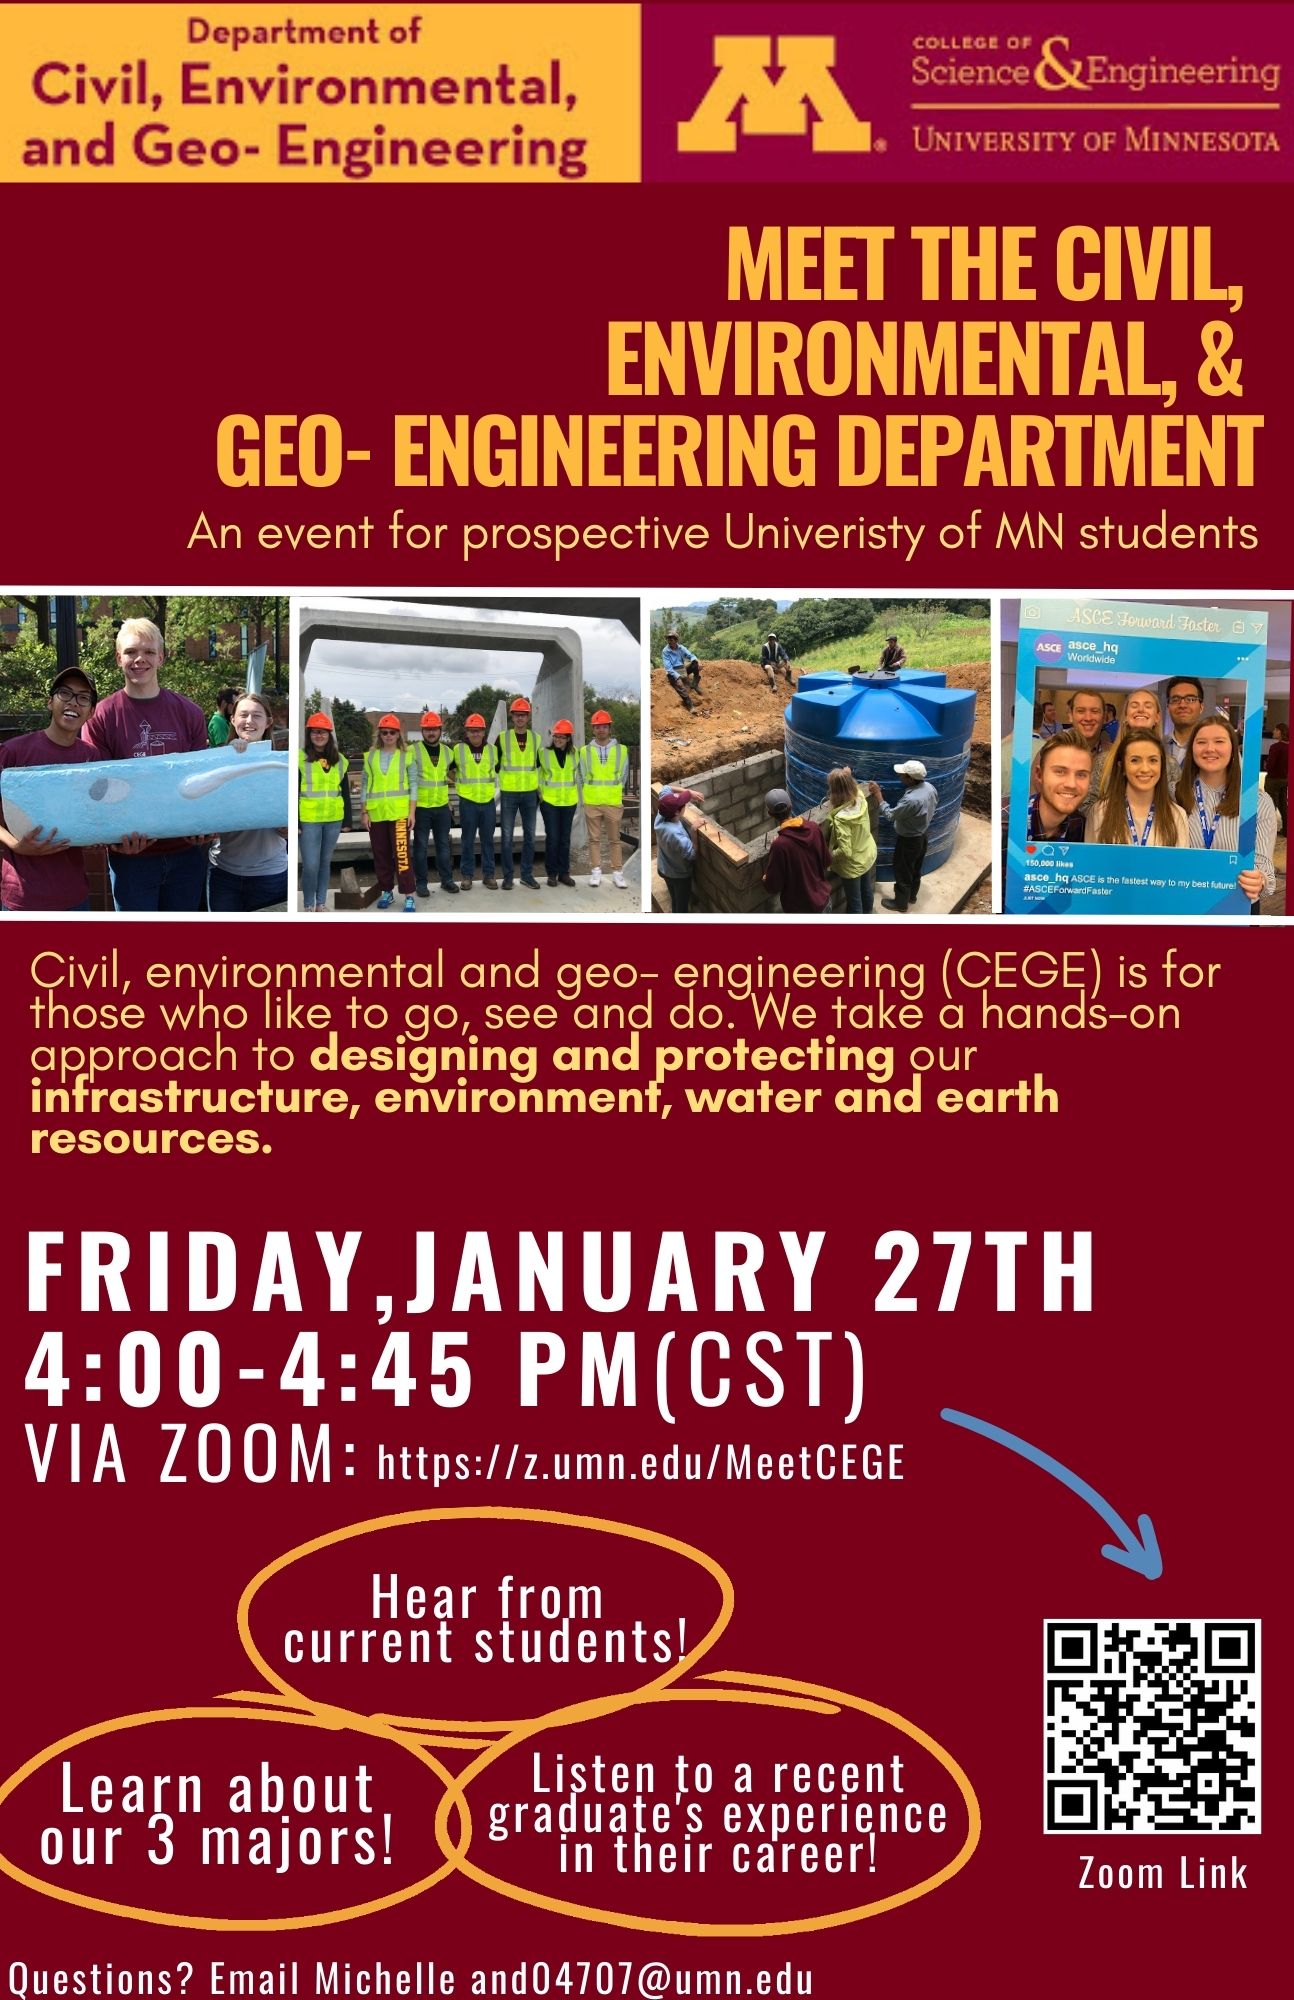 Meet CEGE Event on Jan 27 via zoom https:/z.umm.edu/MeetCEGE